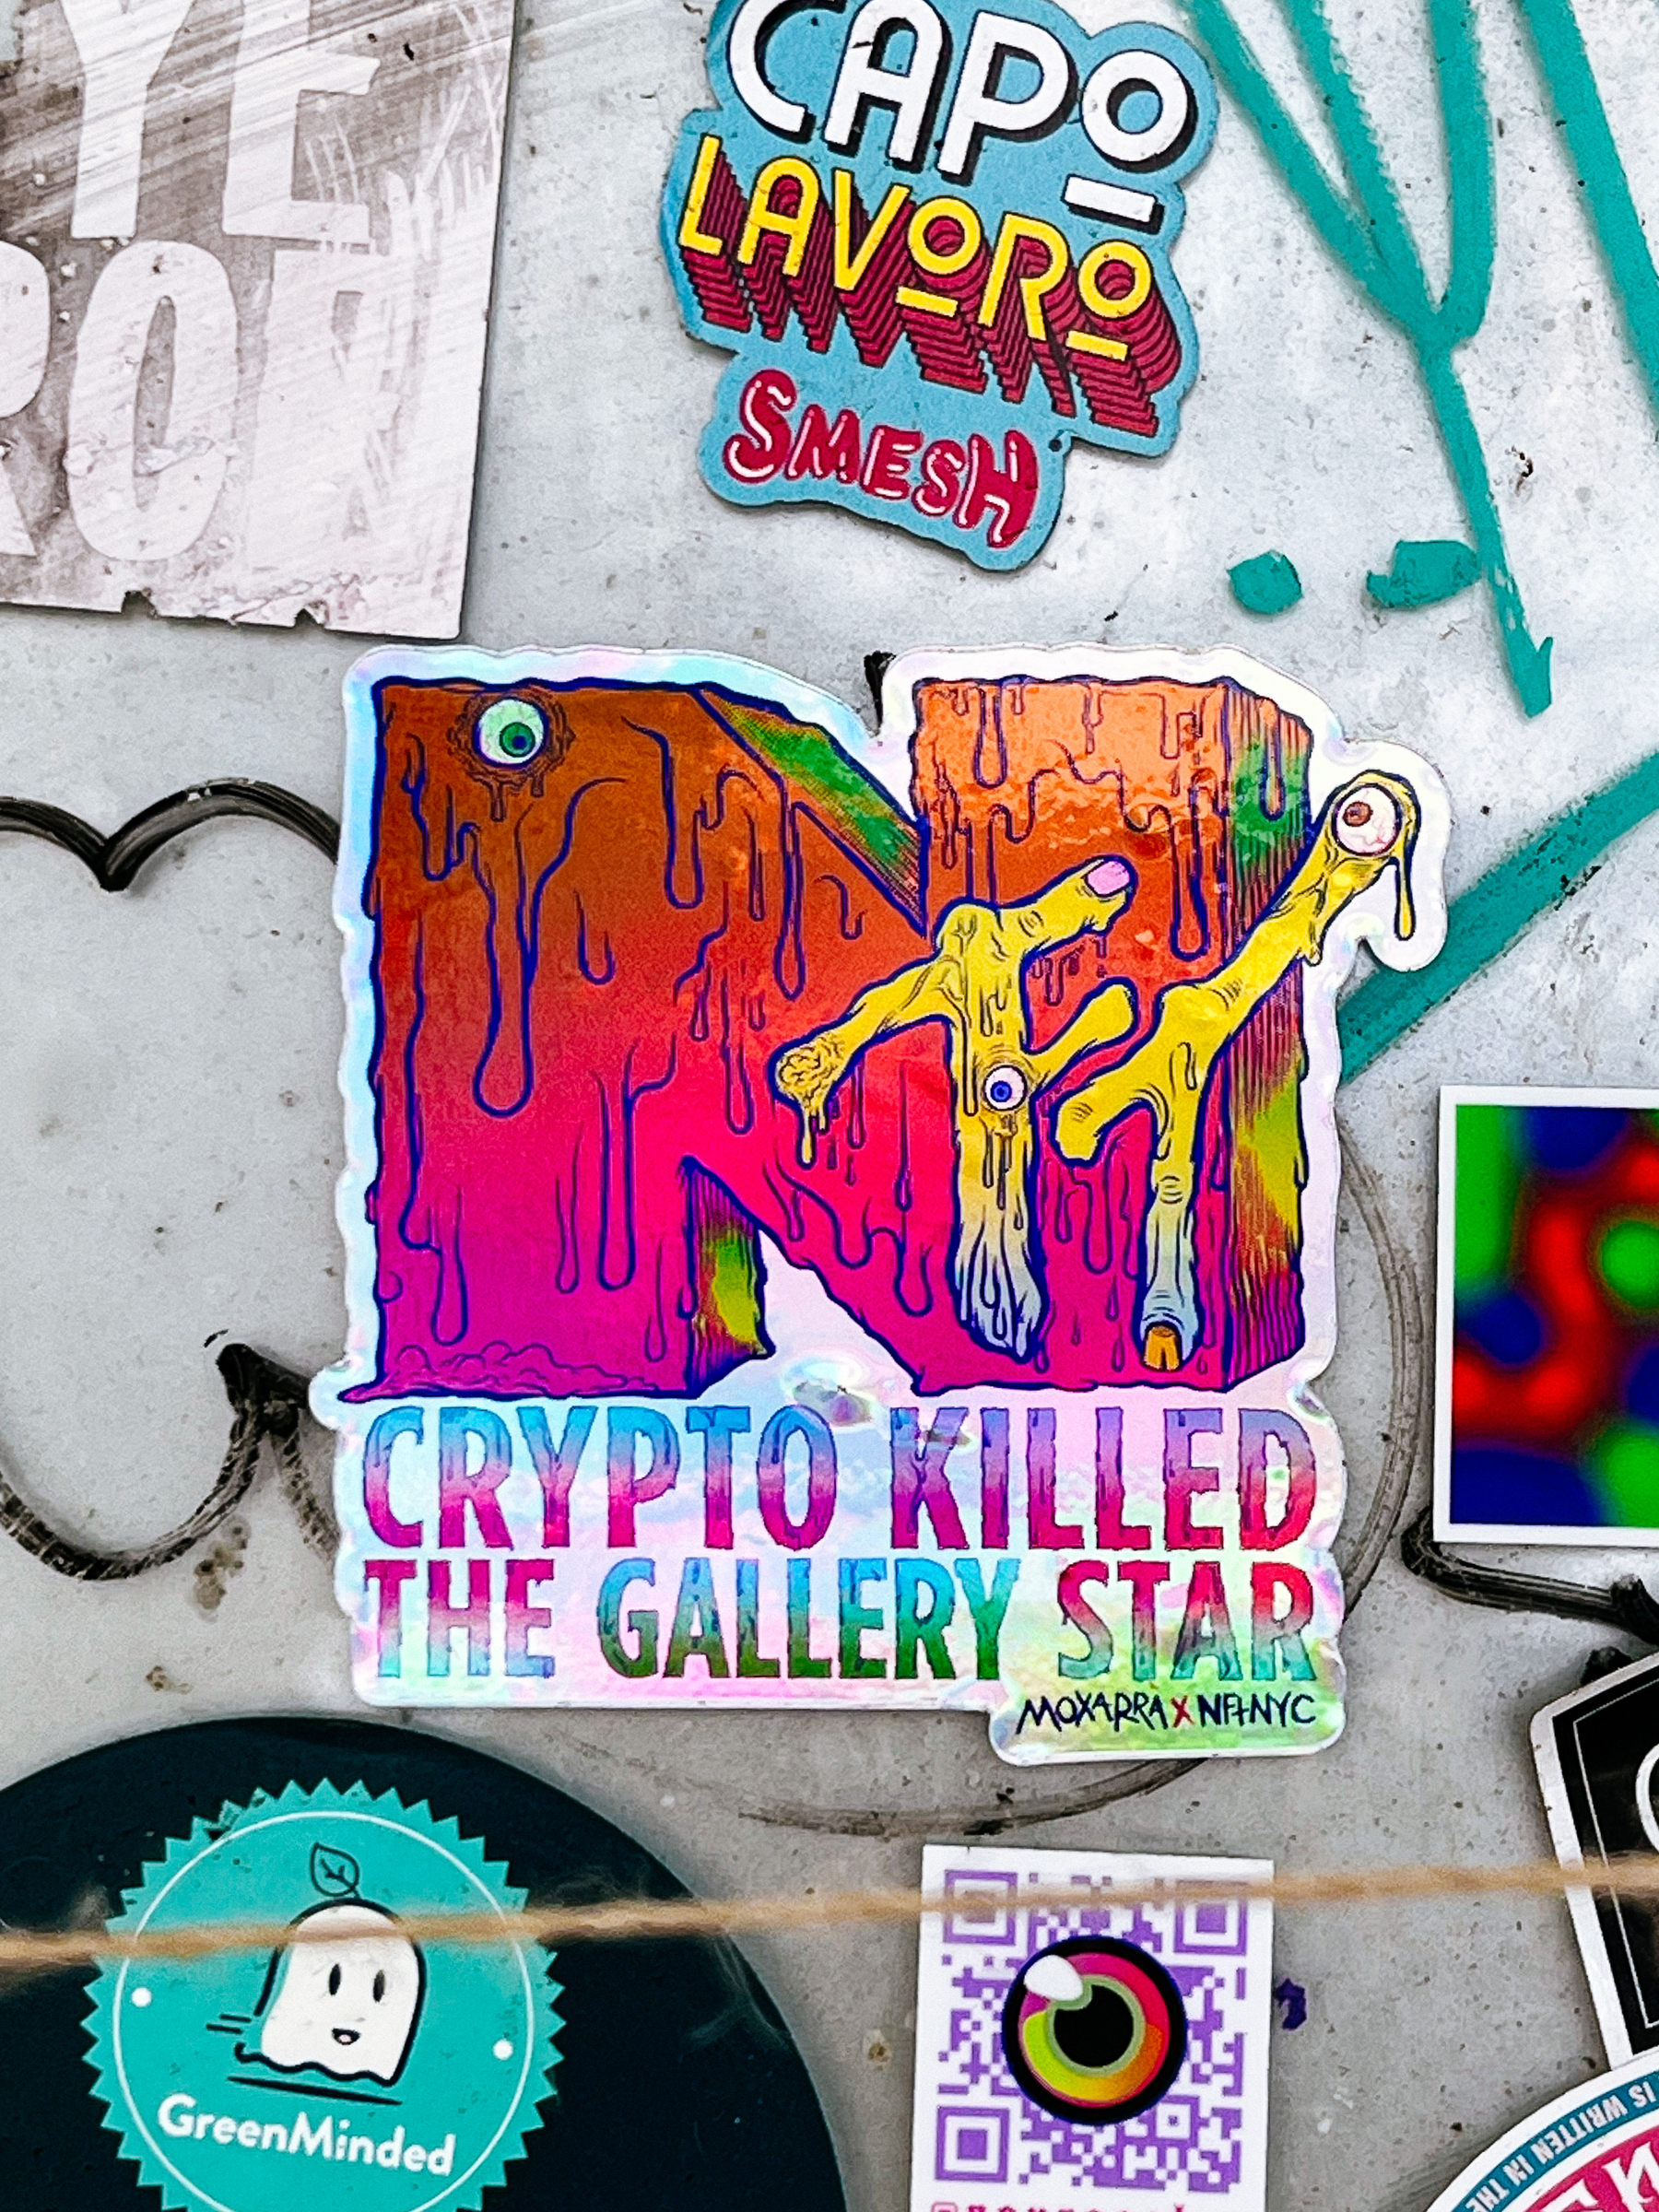 “Crypto killed the gallery star”. Sticker. 